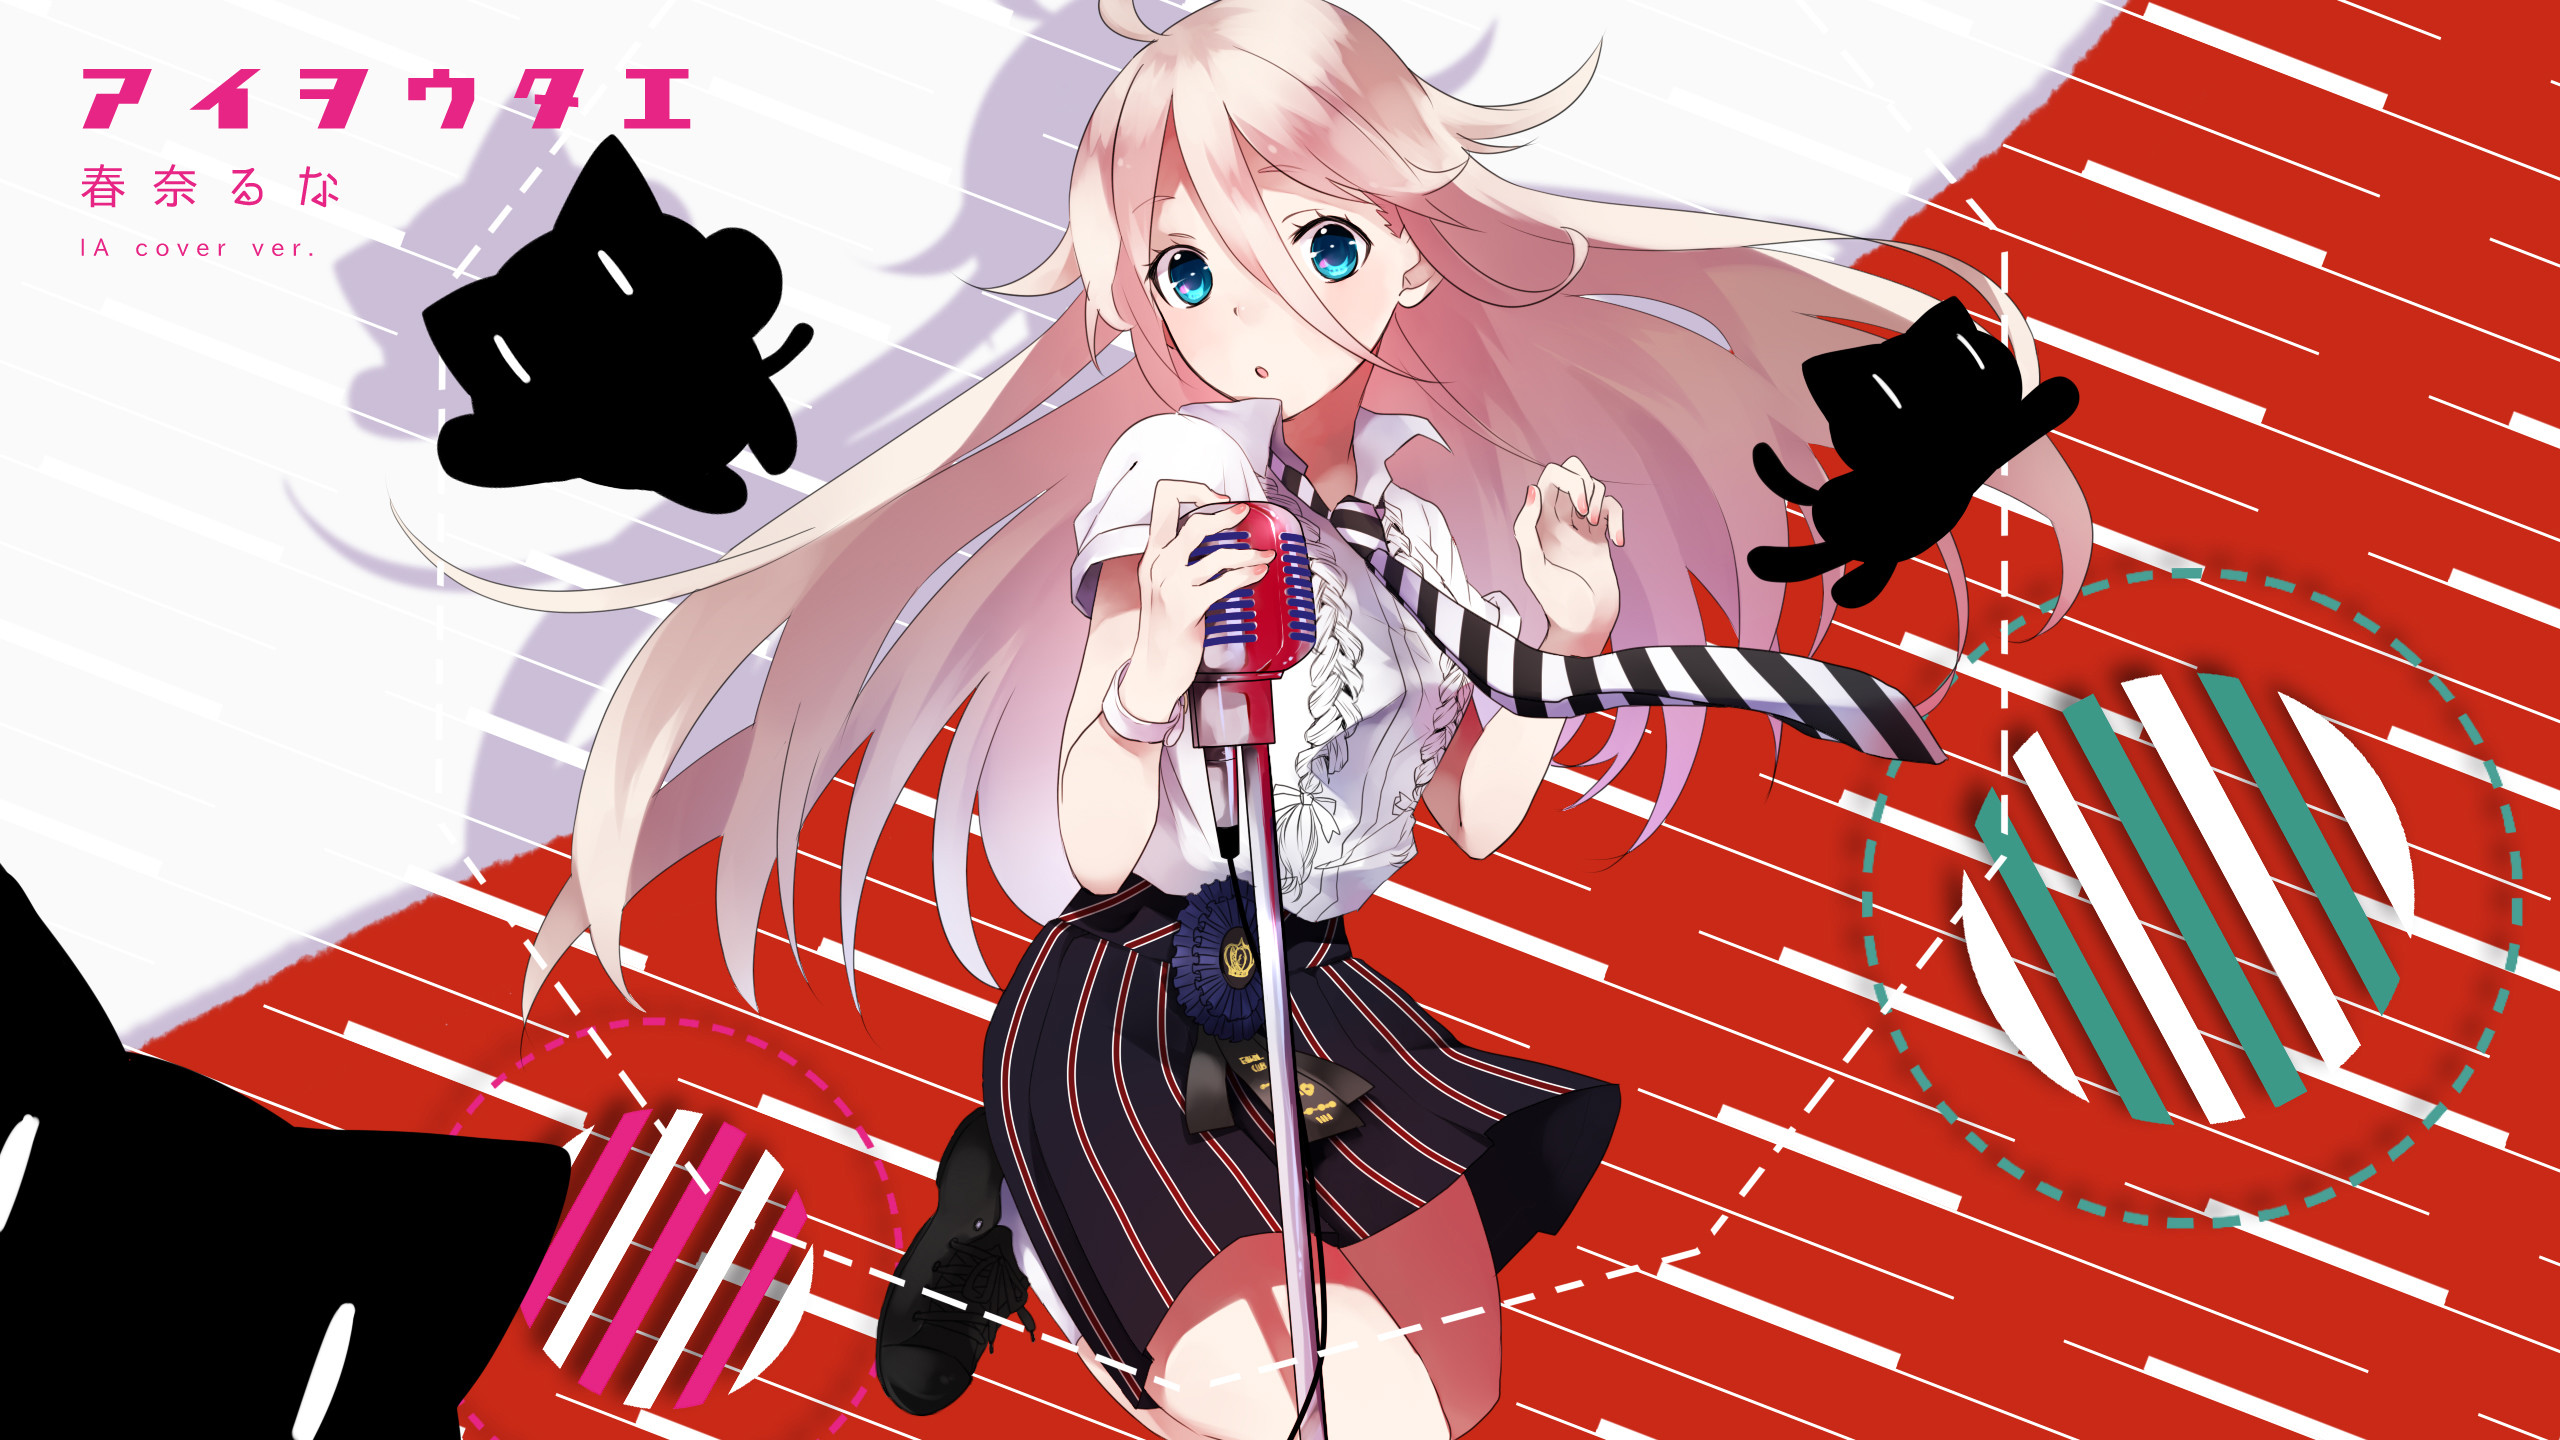 2560x1440 Anime - Vocaloid IA (Vocaloid) Wallpaper